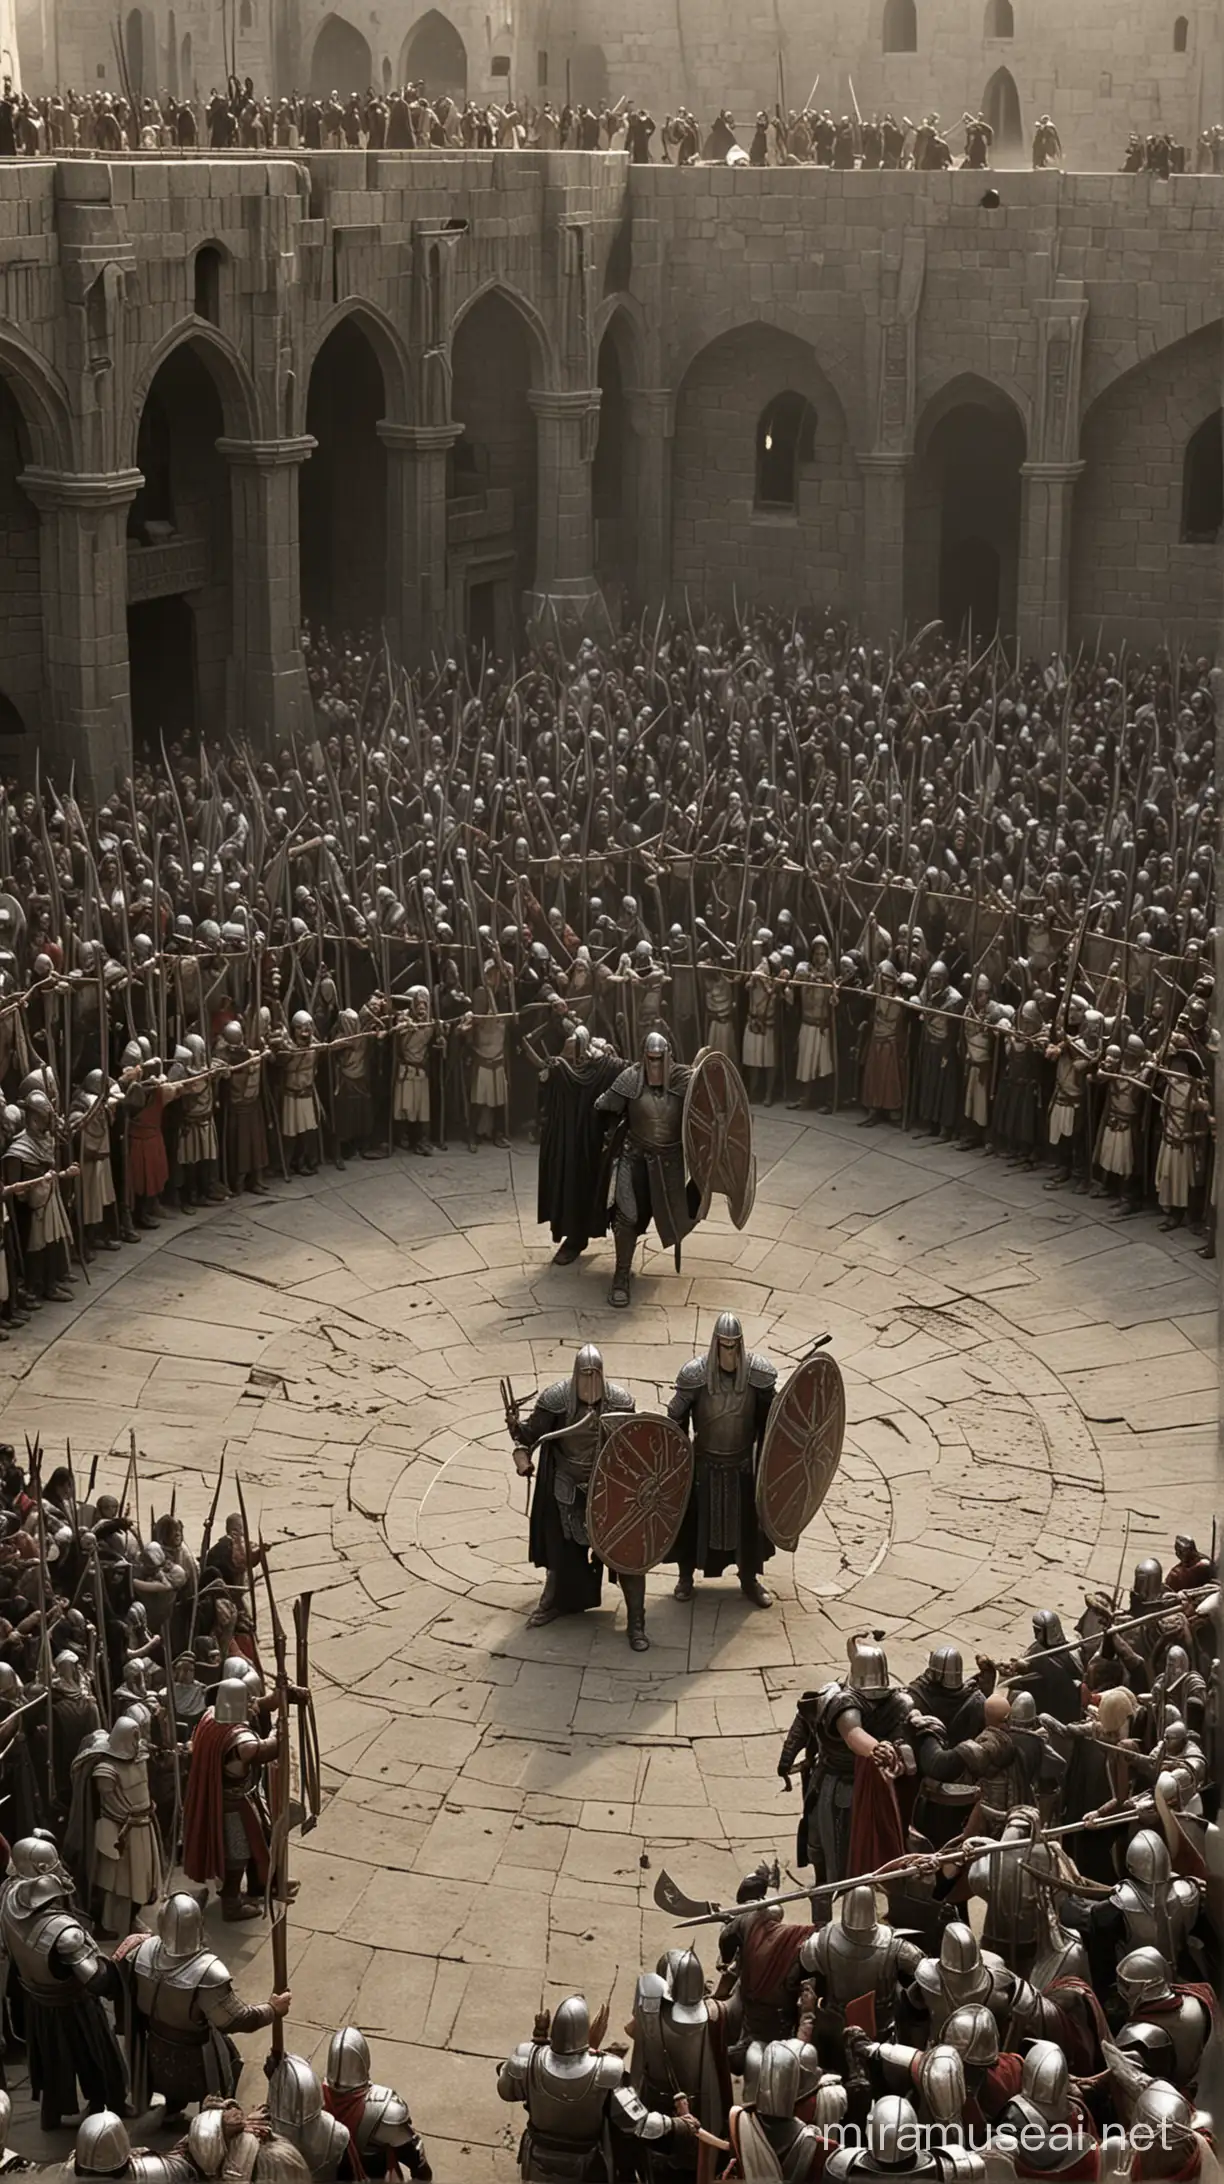 Inside the arena, near Minas Tirith, Saruman is fighting with gladiators.